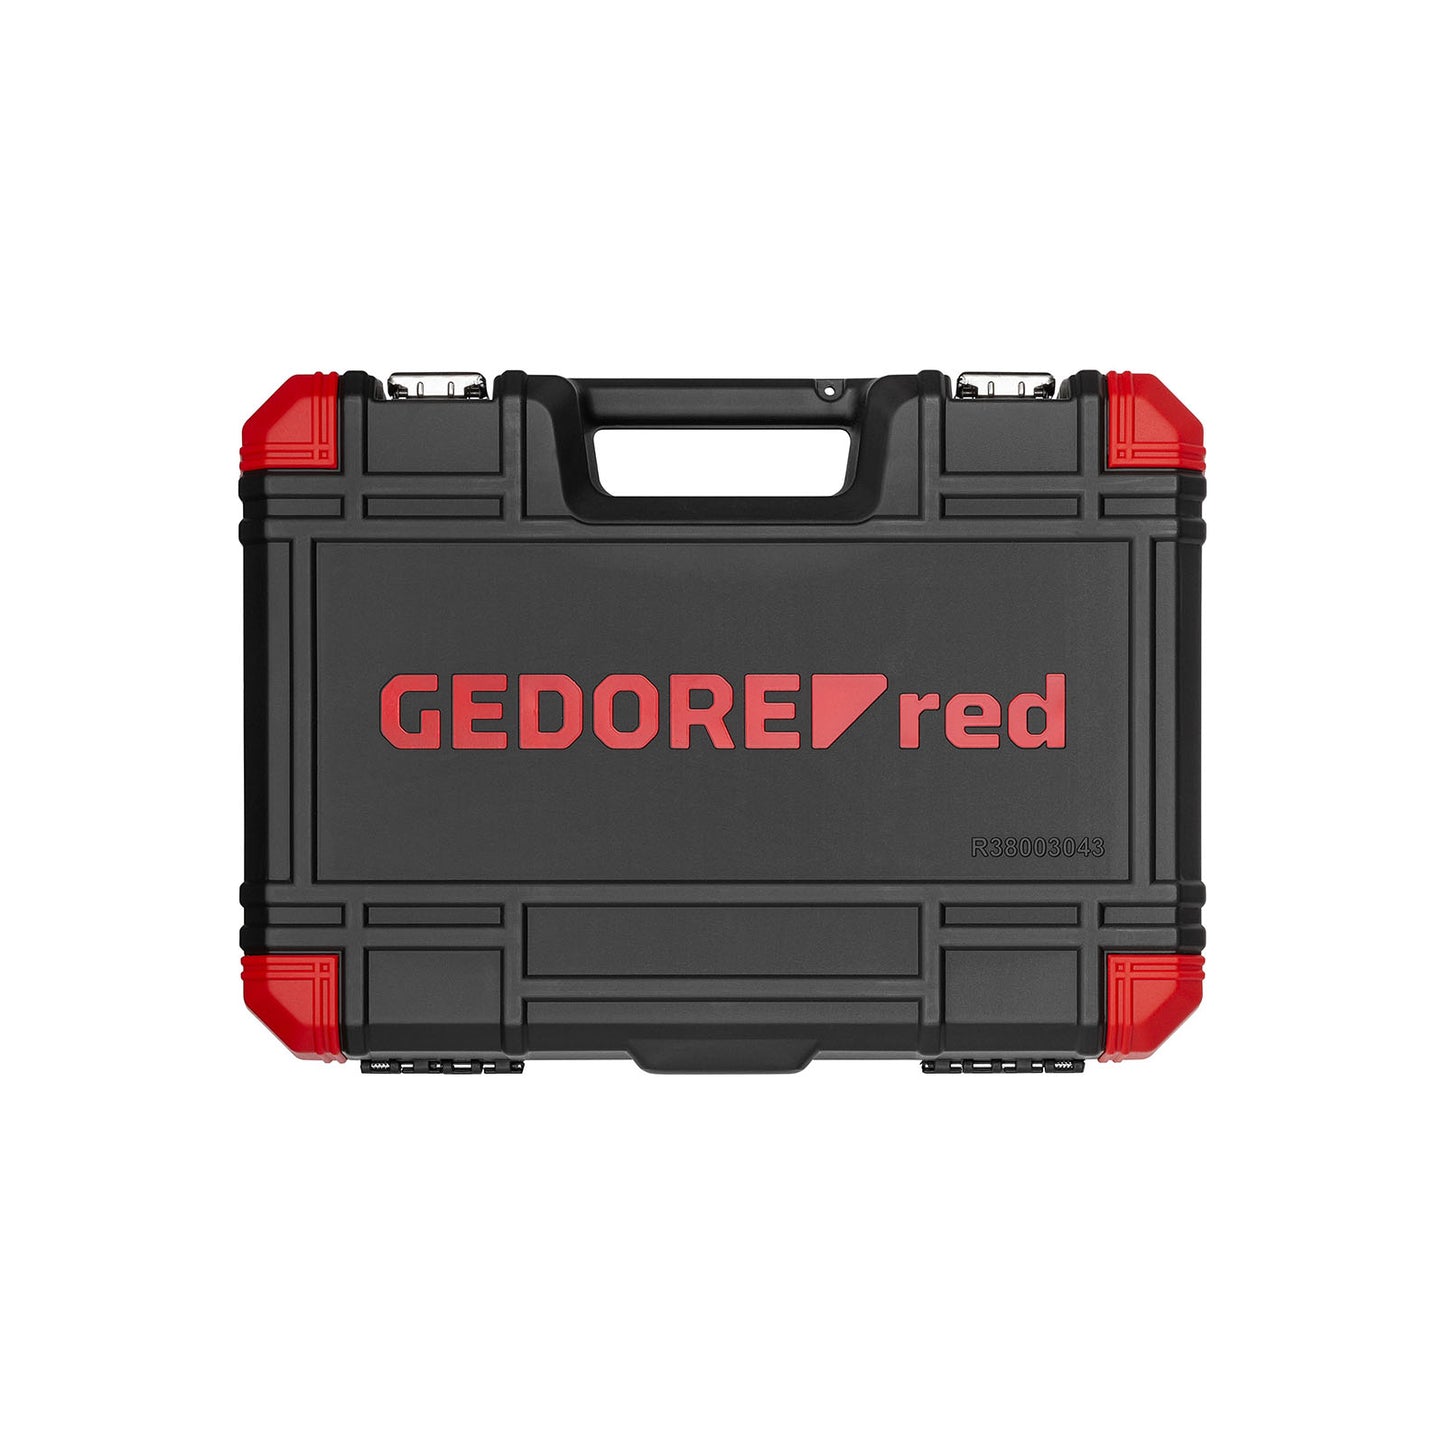 GEDORE rouge R38003043 - Coffret d'outils multifonctions, 43 pièces (3300190)